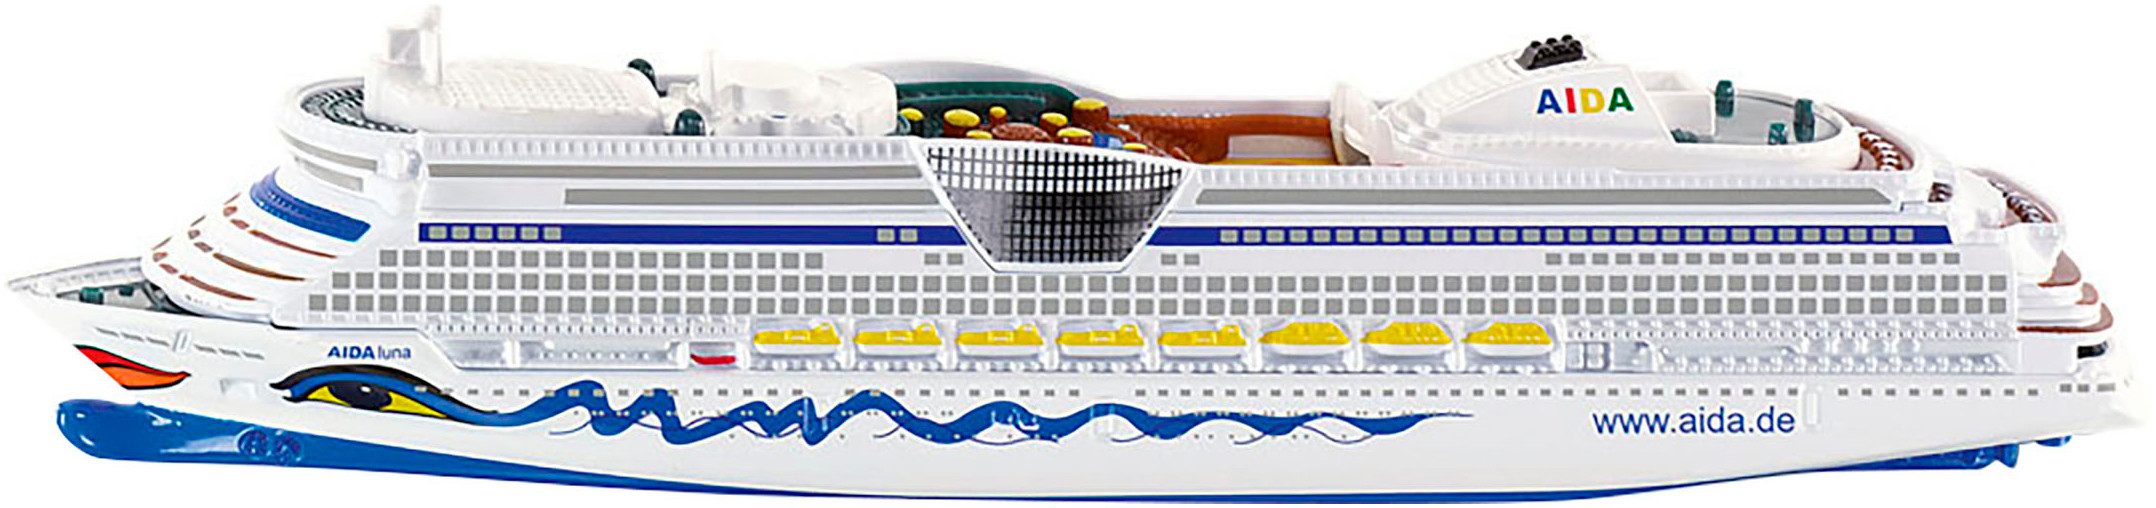 Siku Spielzeug-Schiff Siku Super, Kreuzfahrtschiff AIDAluna (1720)